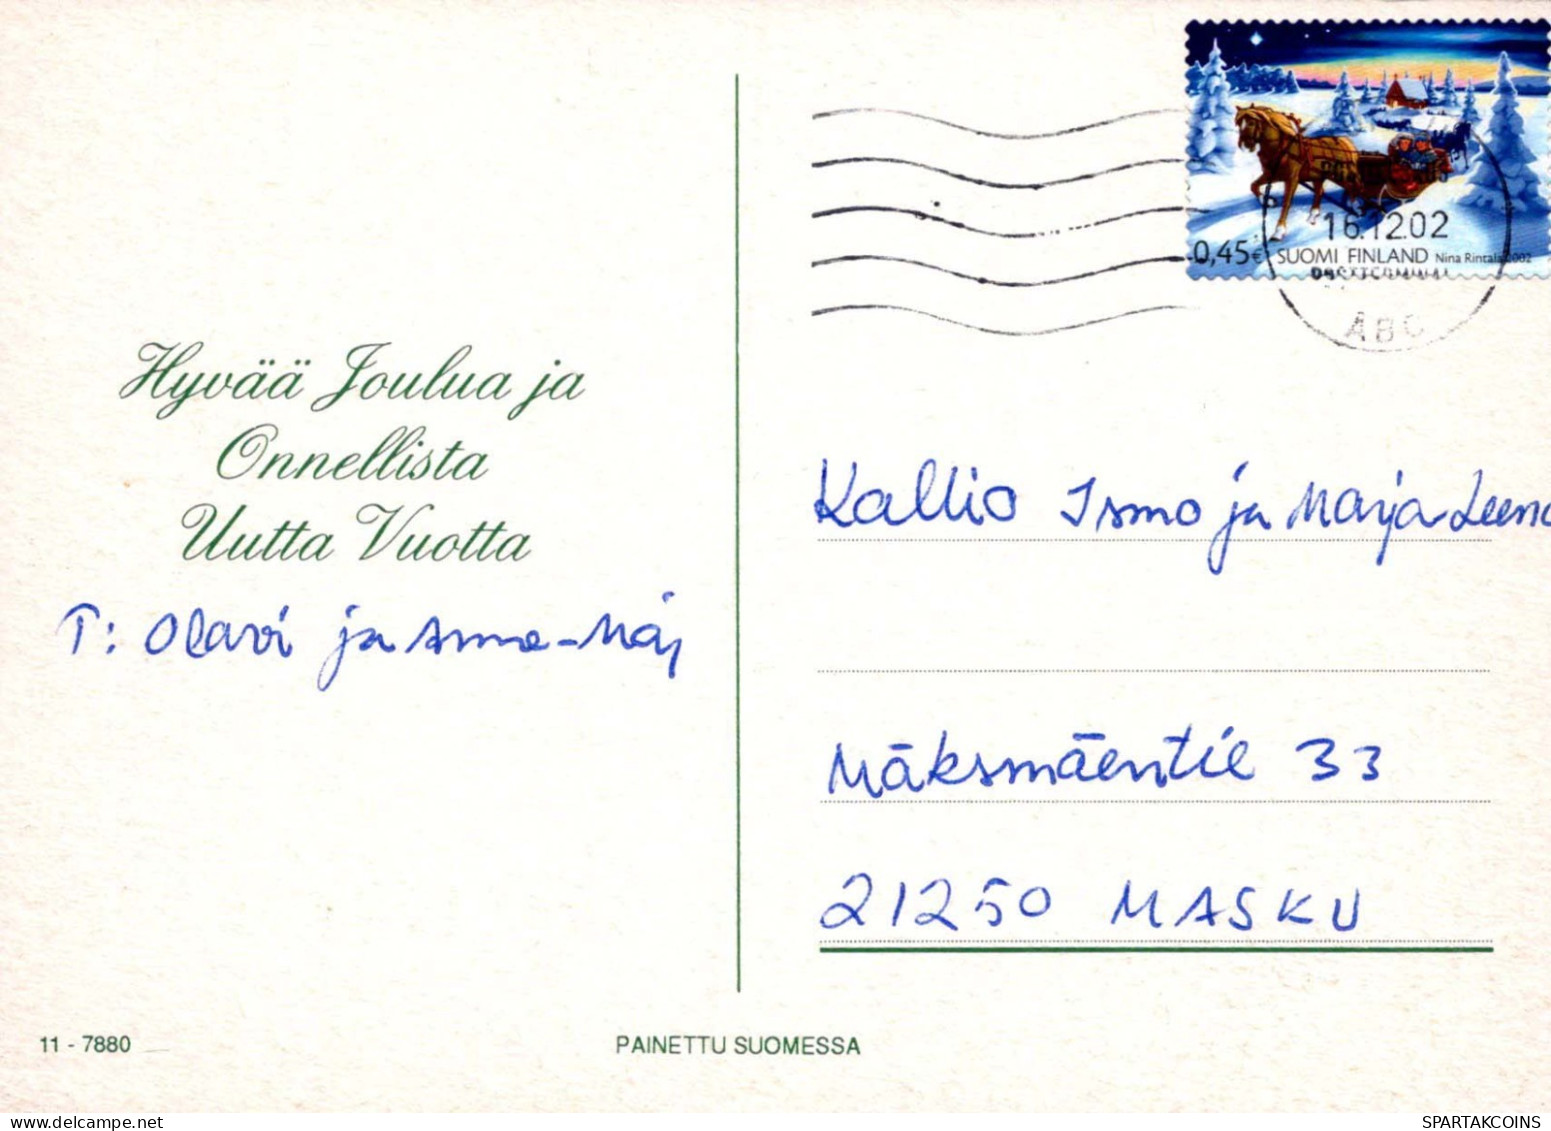 Buon Anno Natale CHIESA Vintage Cartolina CPSM #PAY375.IT - Neujahr